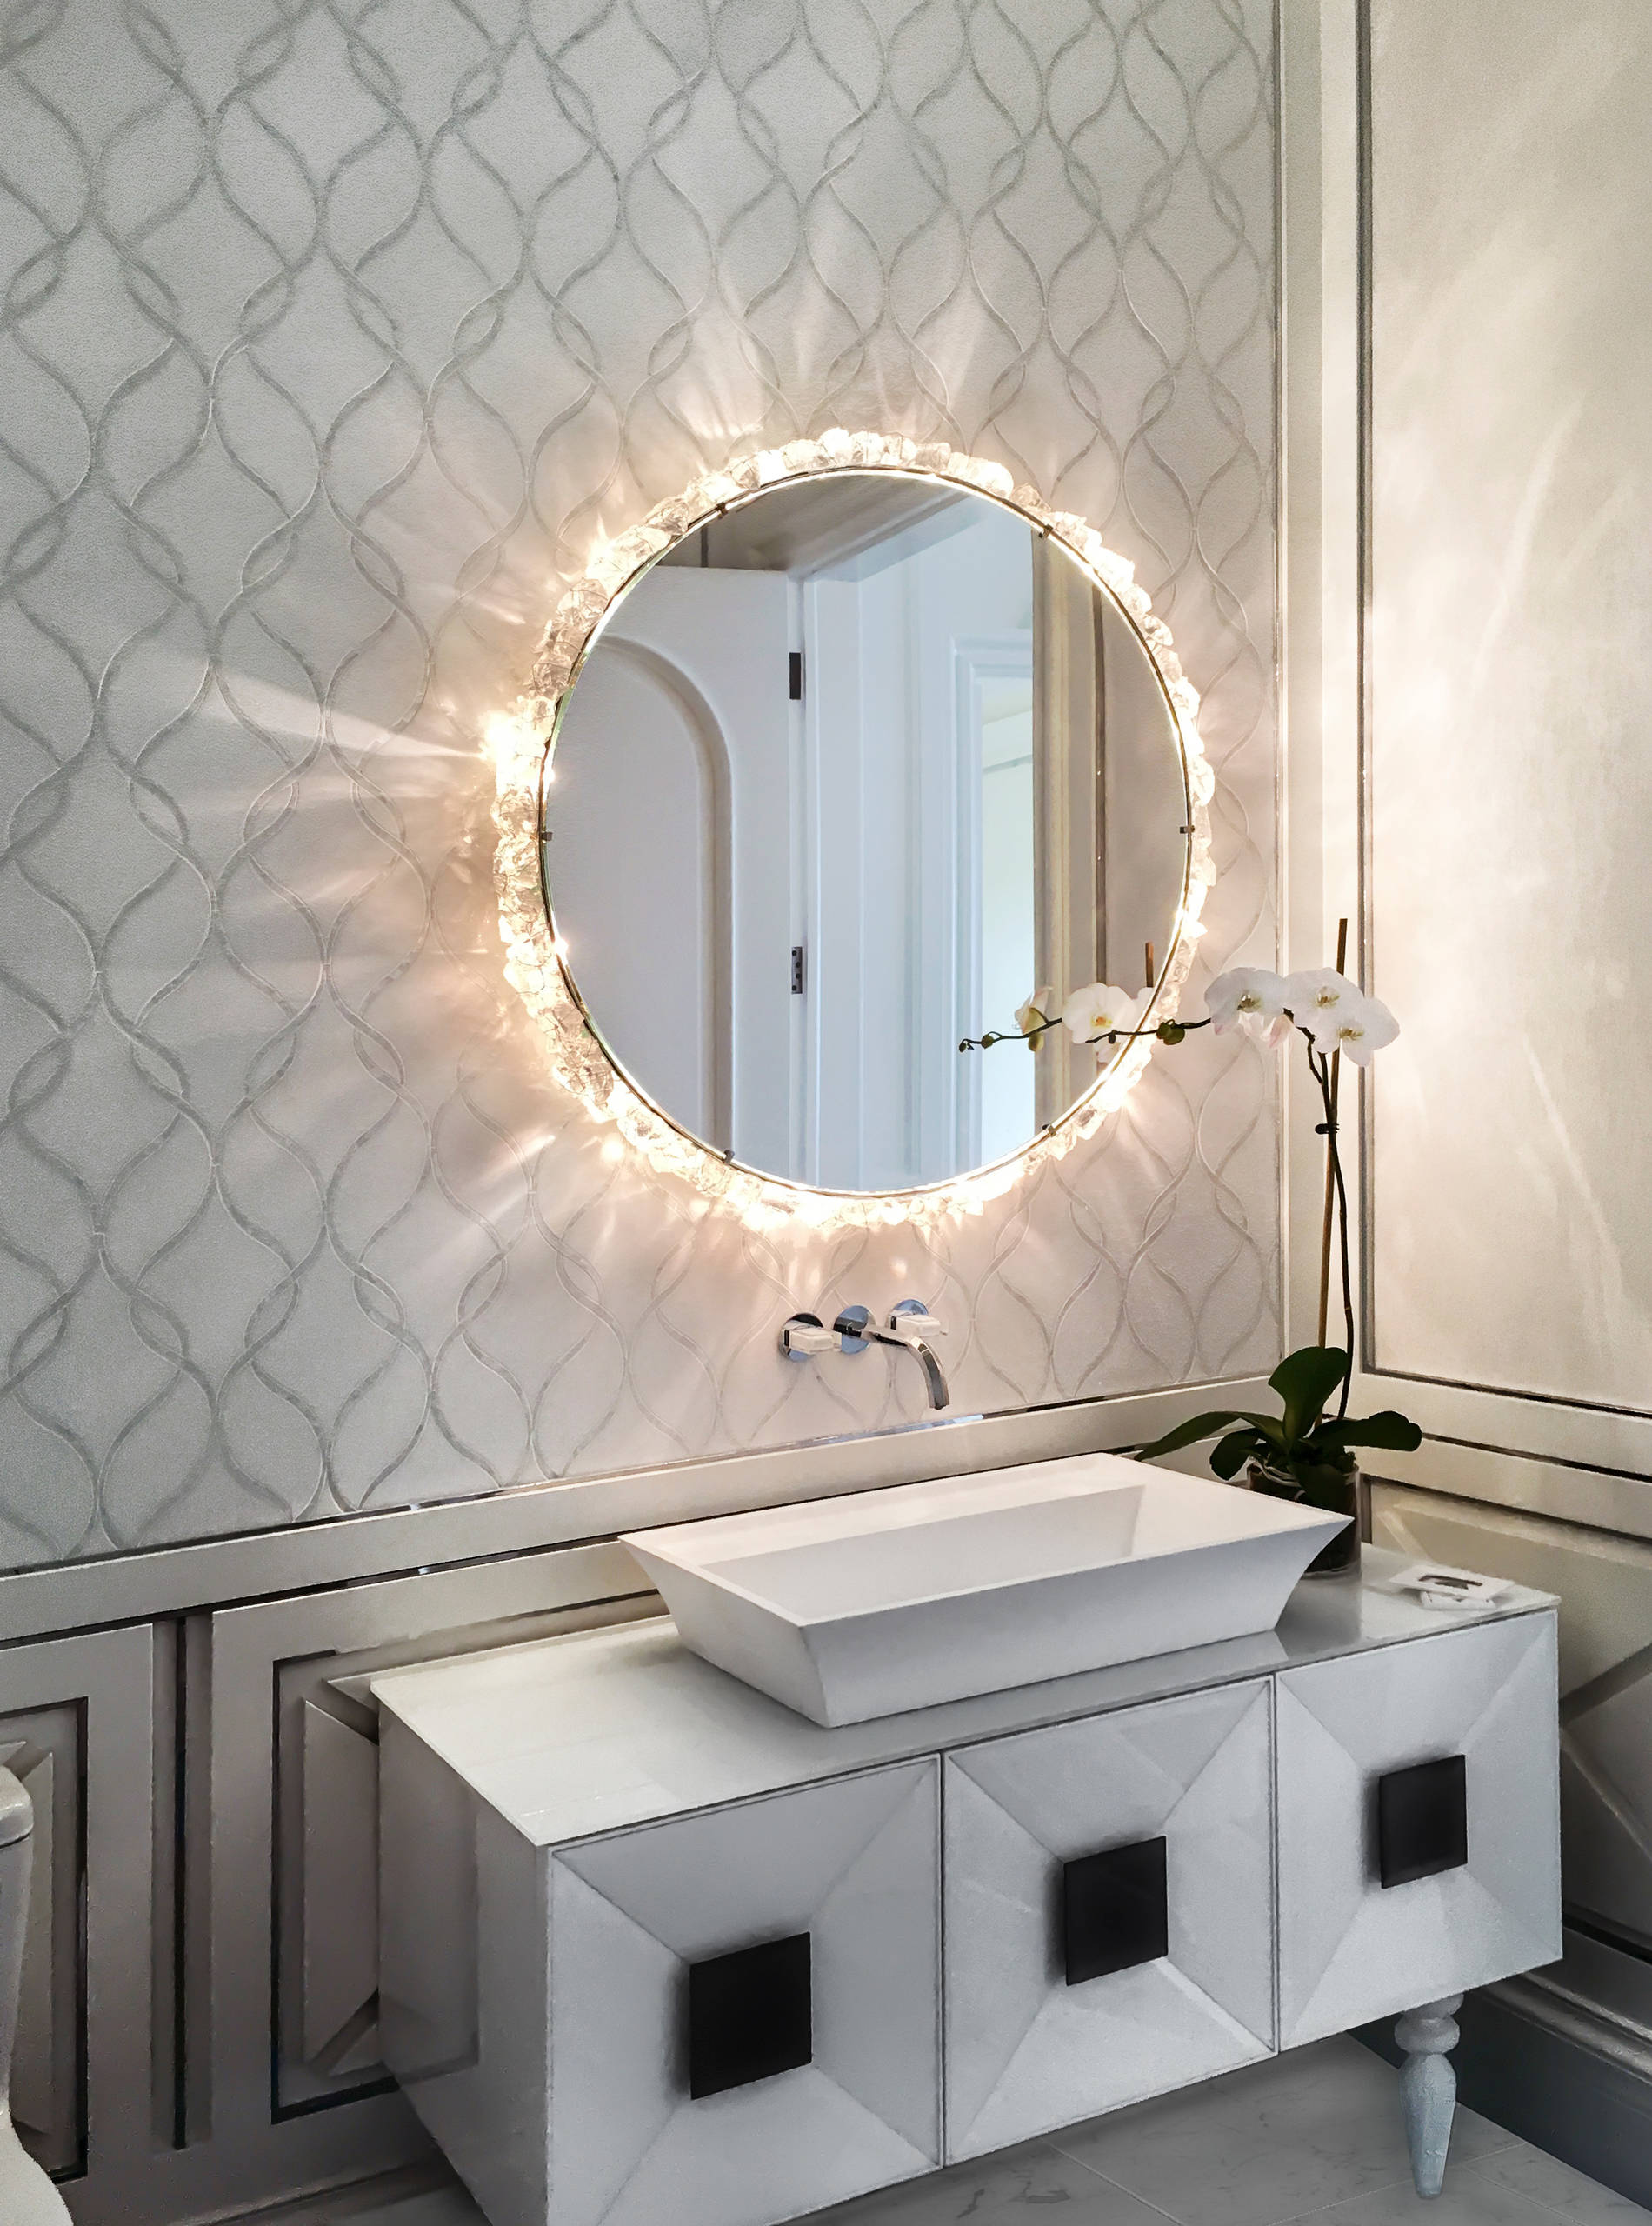 Bathroom Vanity Mirror Ideas Houzz, Vanity Mirrors For Bathroom Ideas